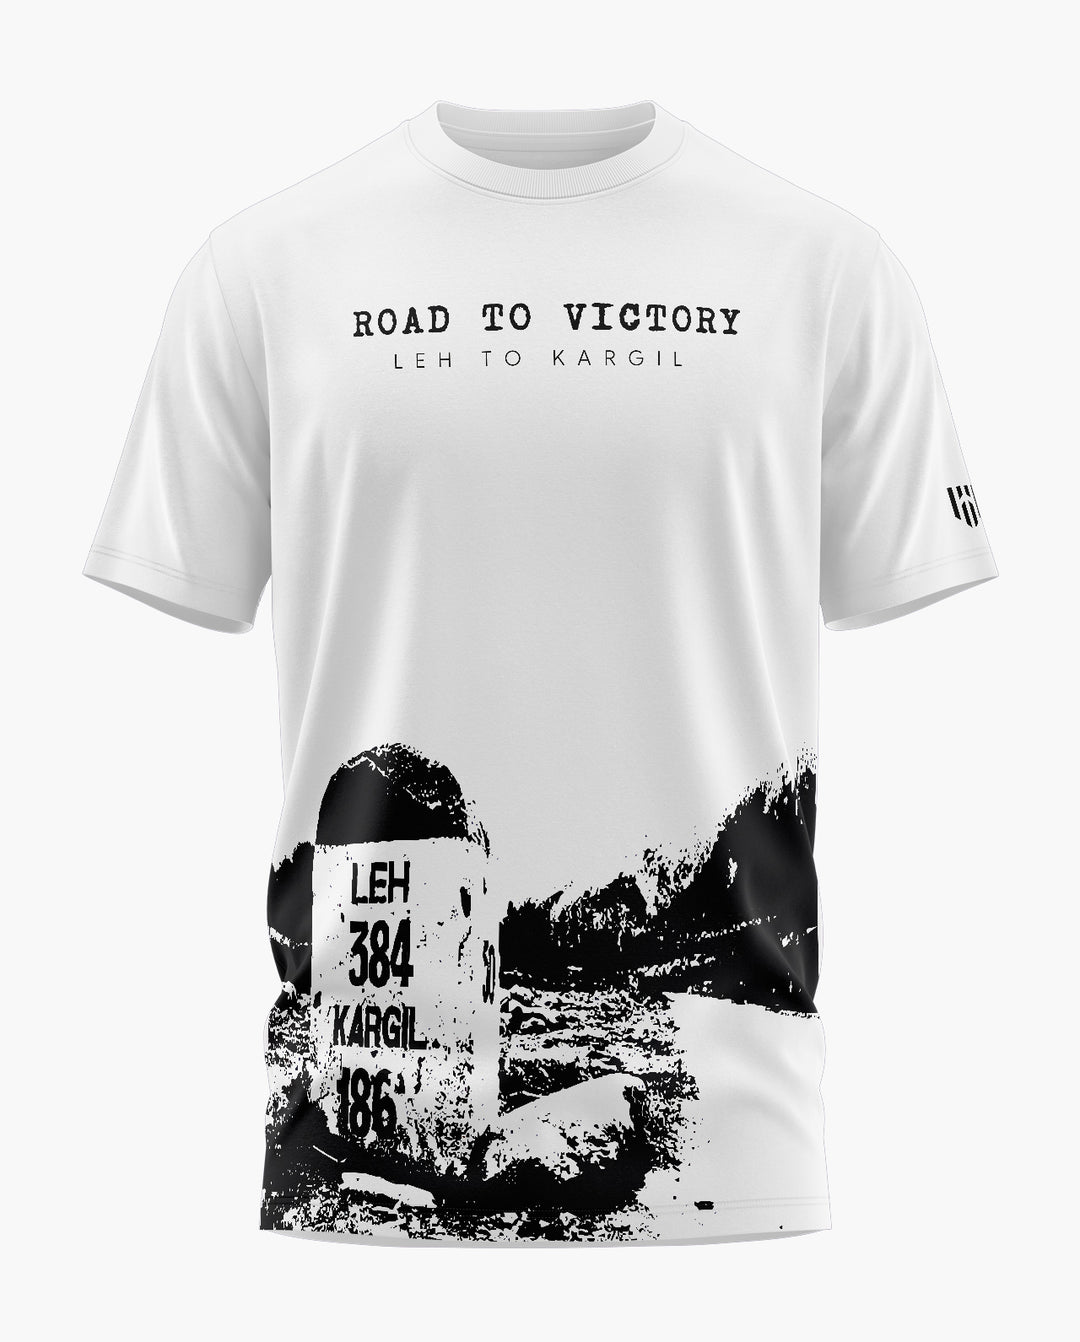 ROAD TO VICTORY KARGIL T-Shirt